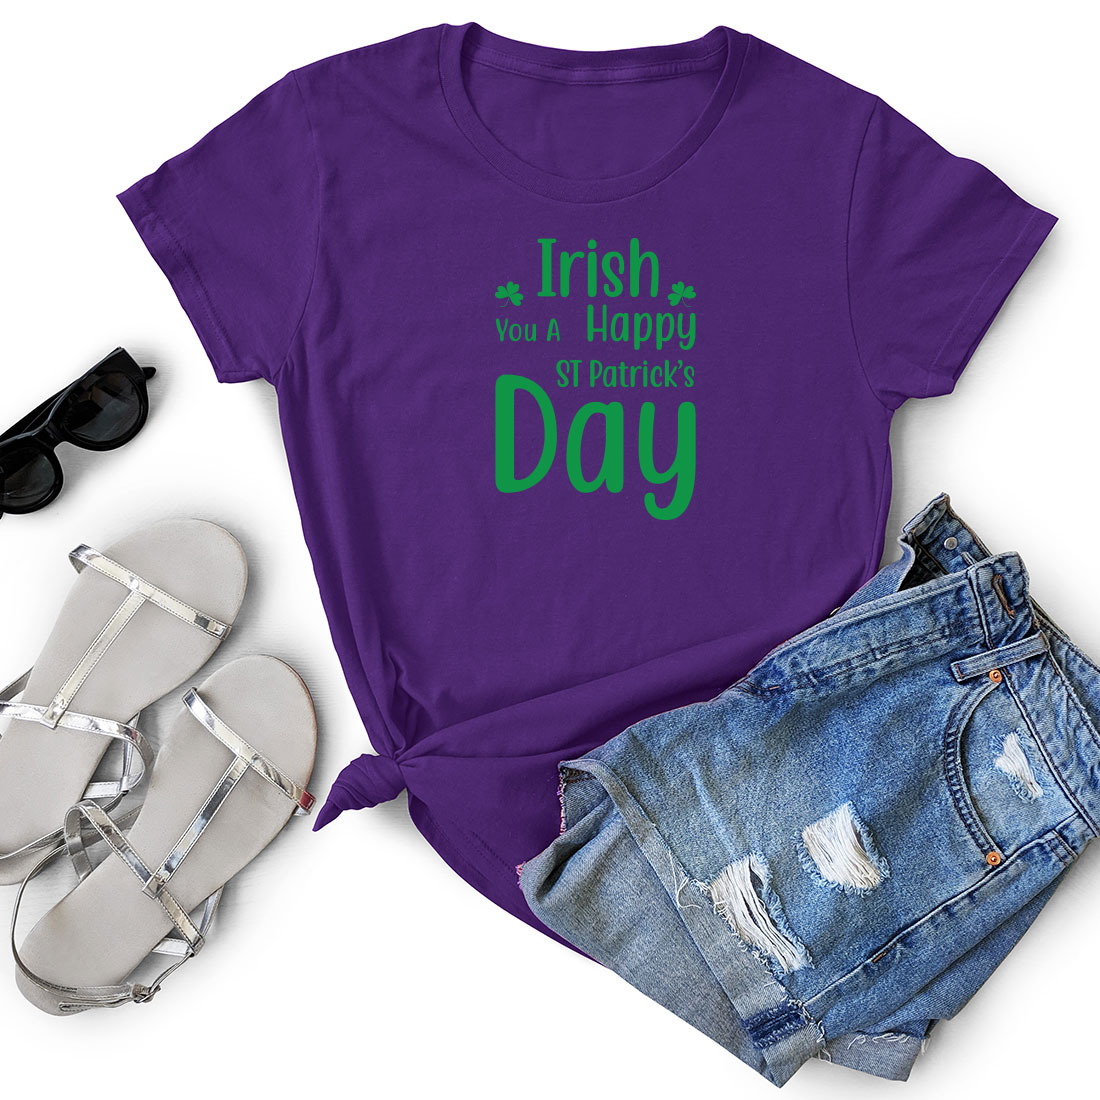 Purple shirt that says irish happy st patrick's day.